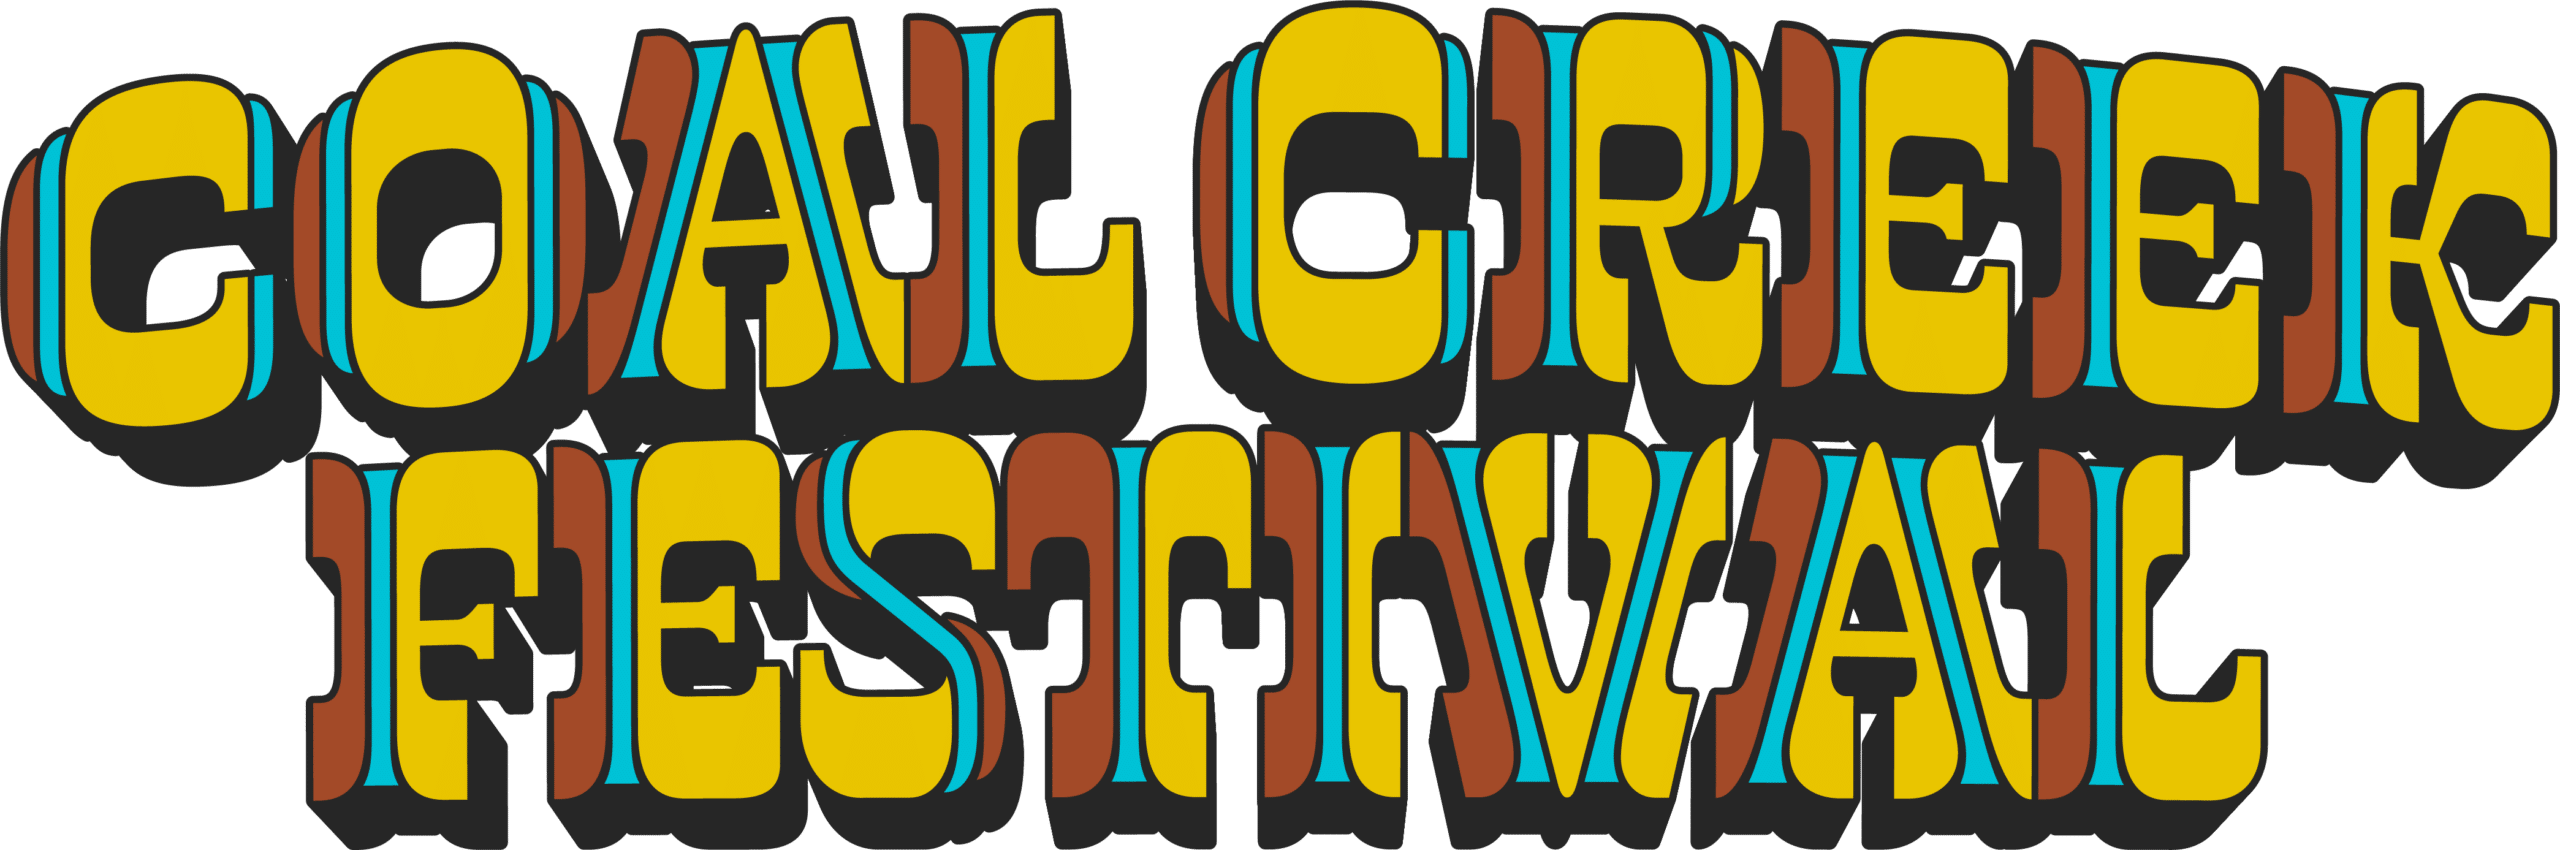 Coal Creek Festival logo